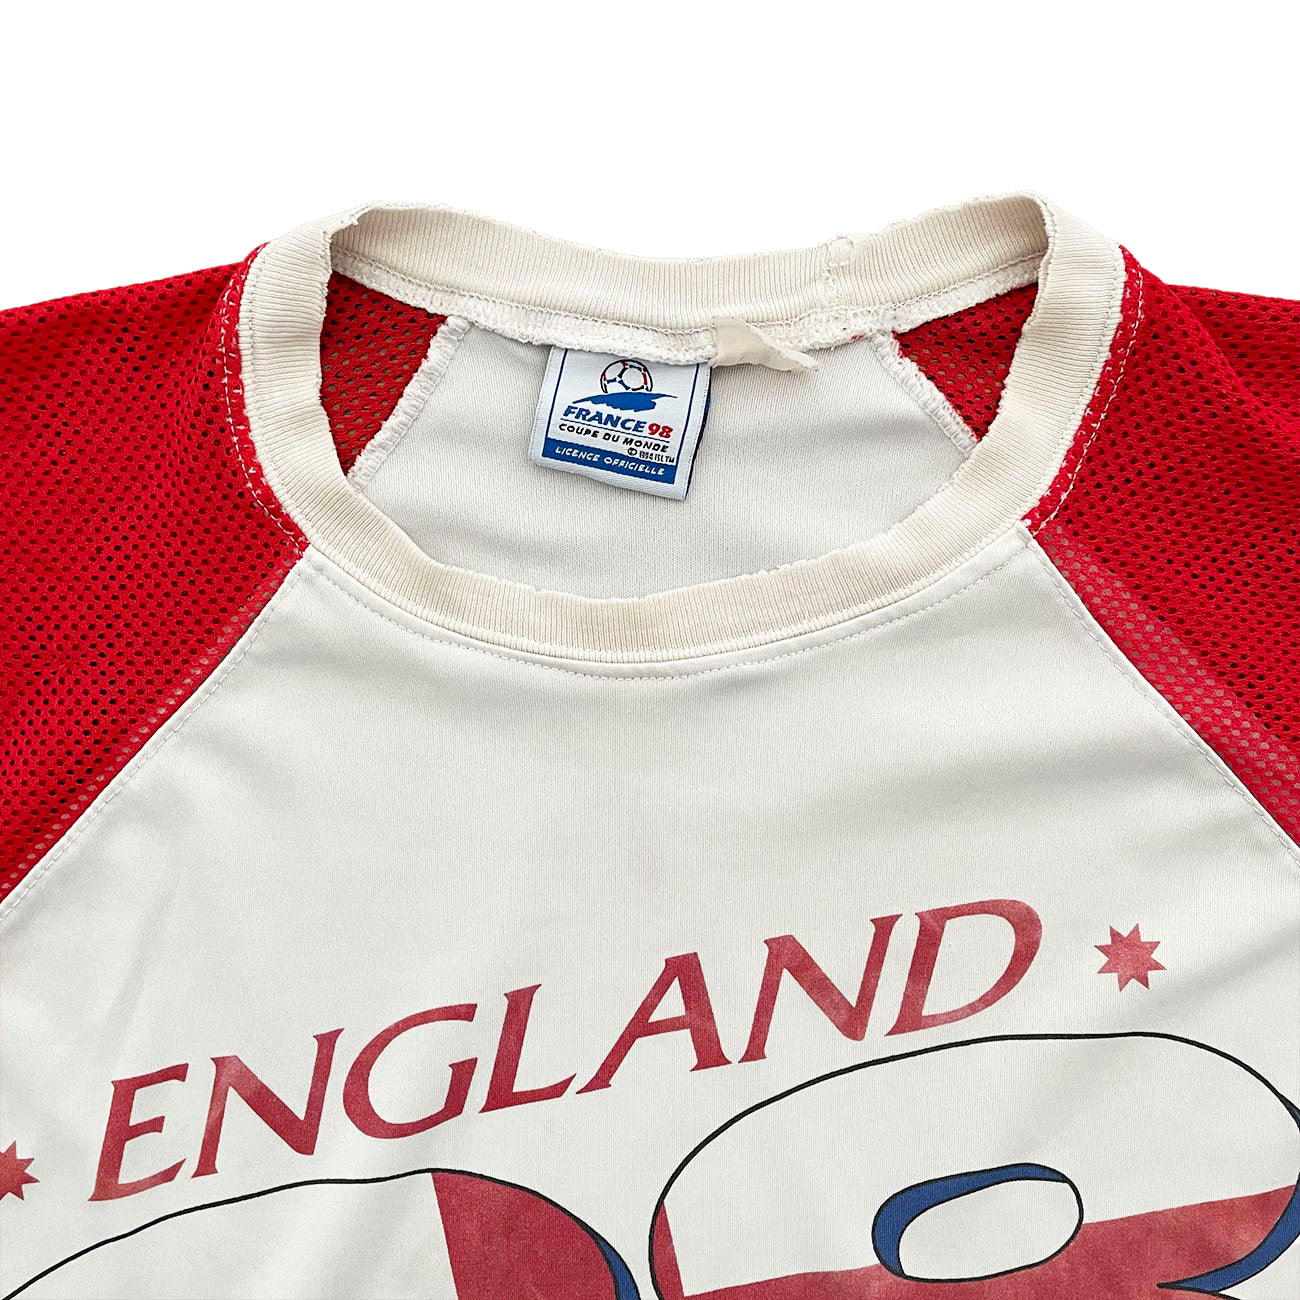 France 98 England Mesh Sleeve Shirt - XL